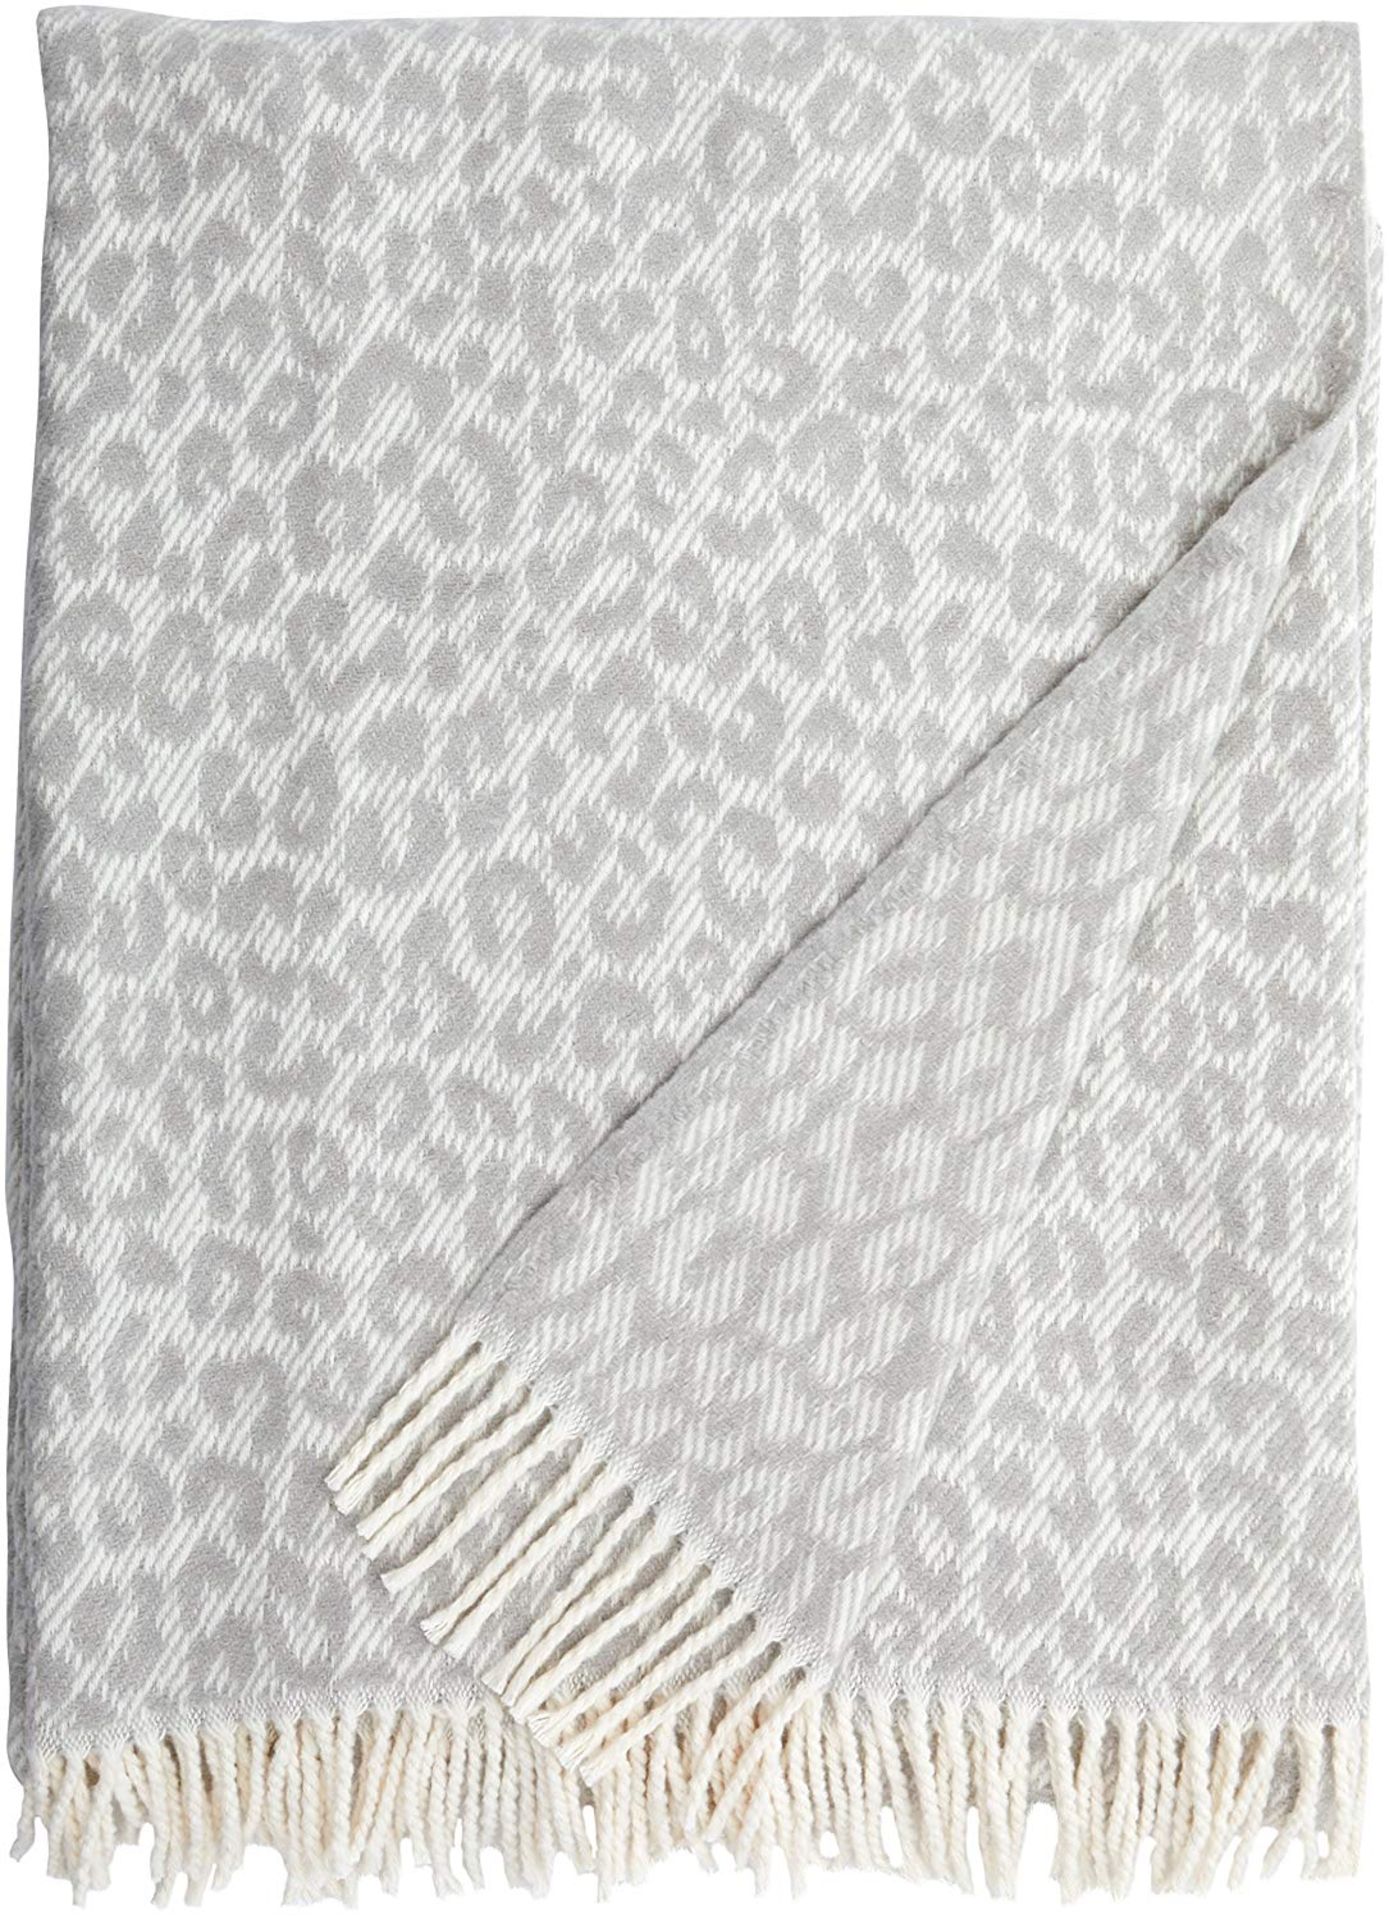 Brand New Euromant Leopard Blanket 140 x 180 x 5 cm light grey